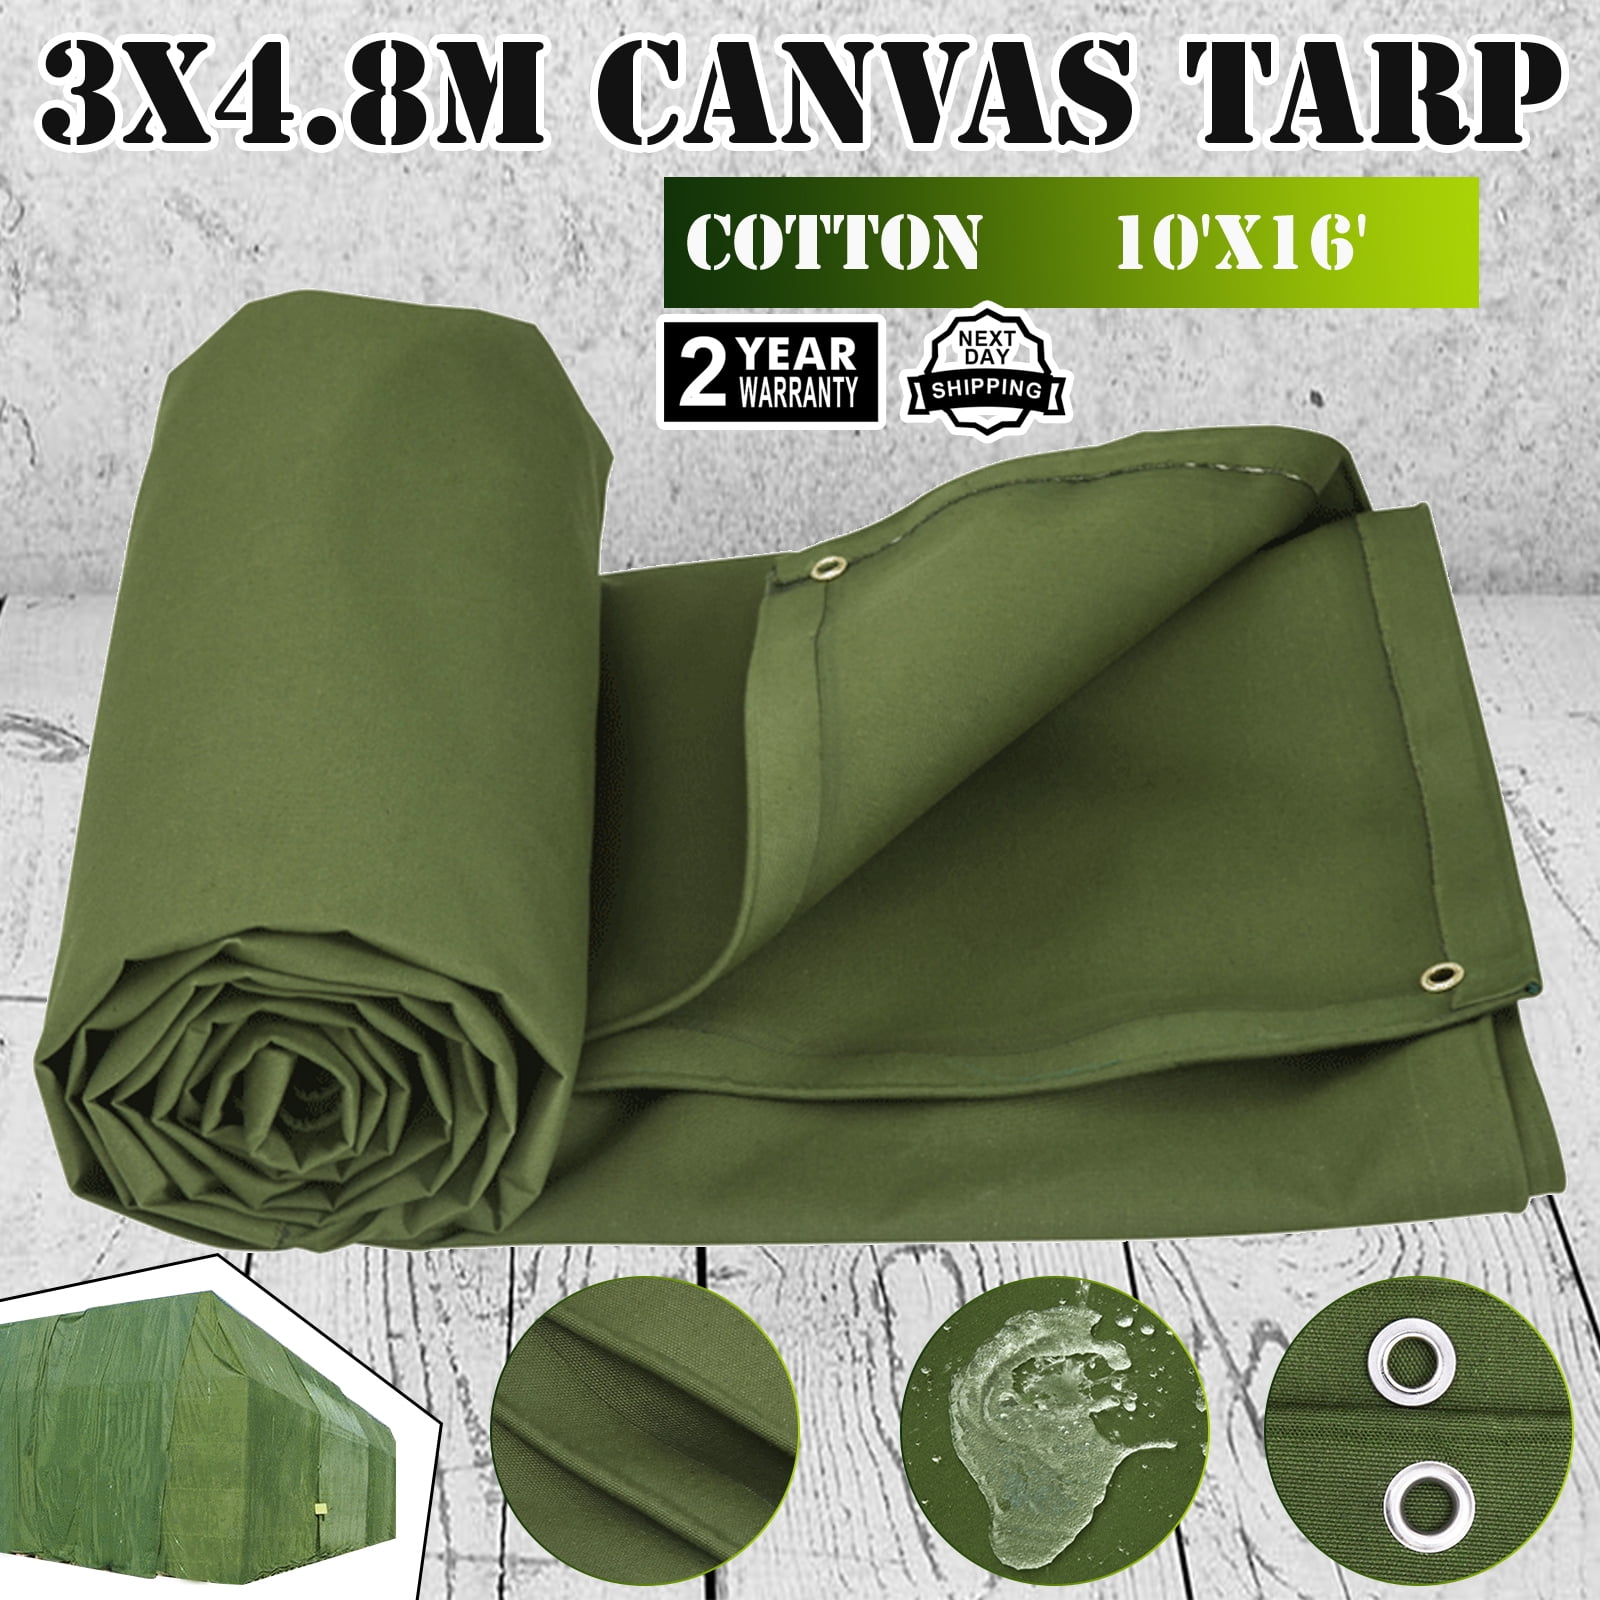 10'x 16' Canvas Tarp 3X4.8M Green Cotton Tarpaulin Lumber Waterproof 18 OZ 